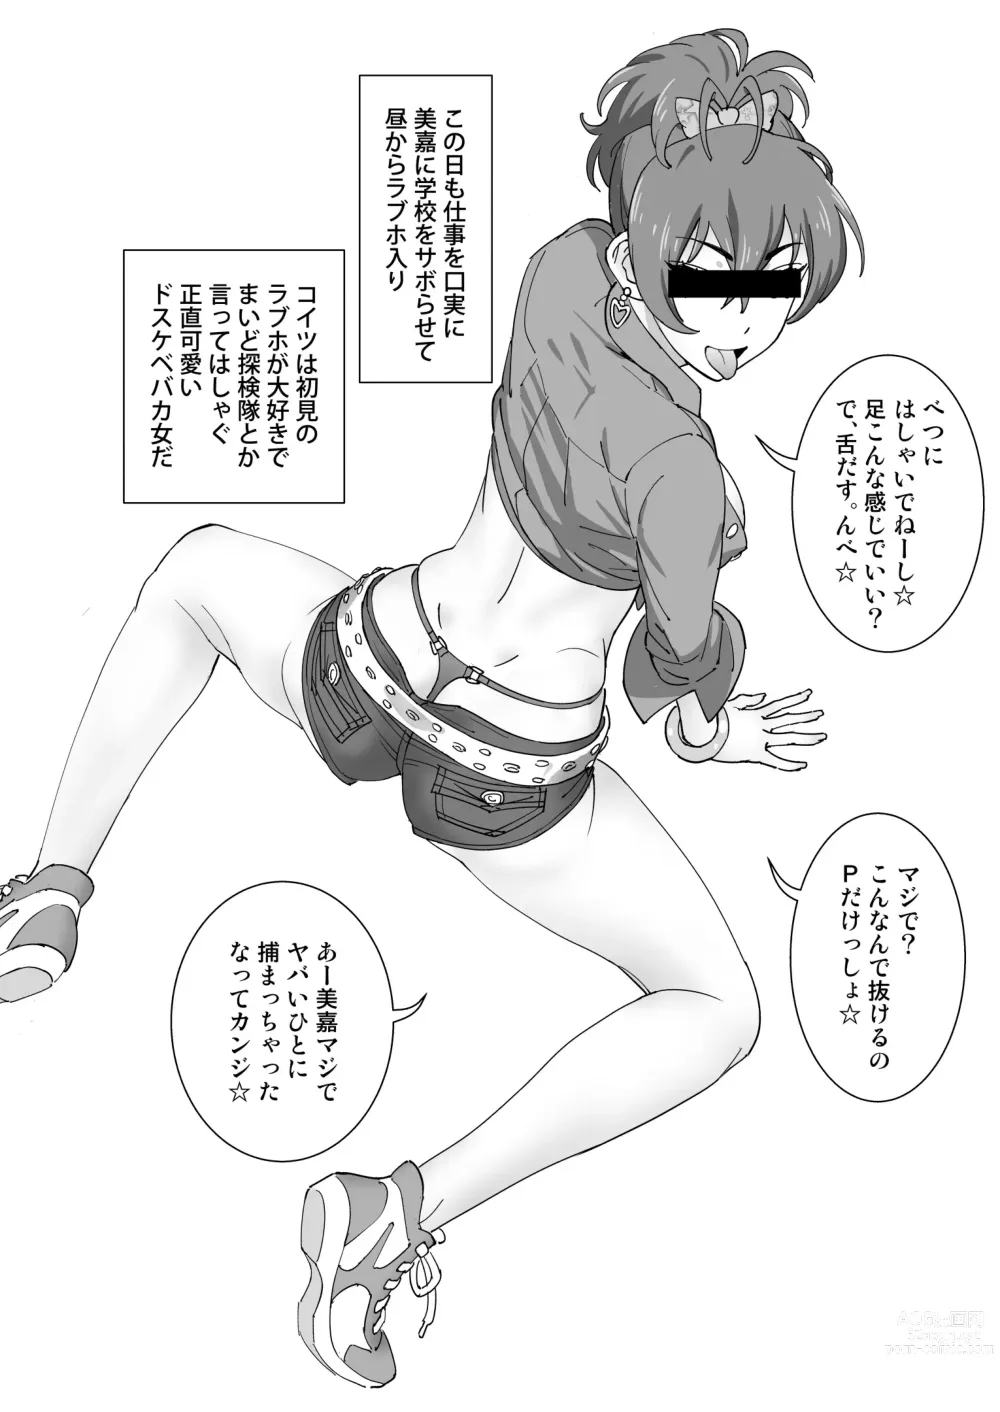 Page 6 of doujinshi Mika Bukkaketa